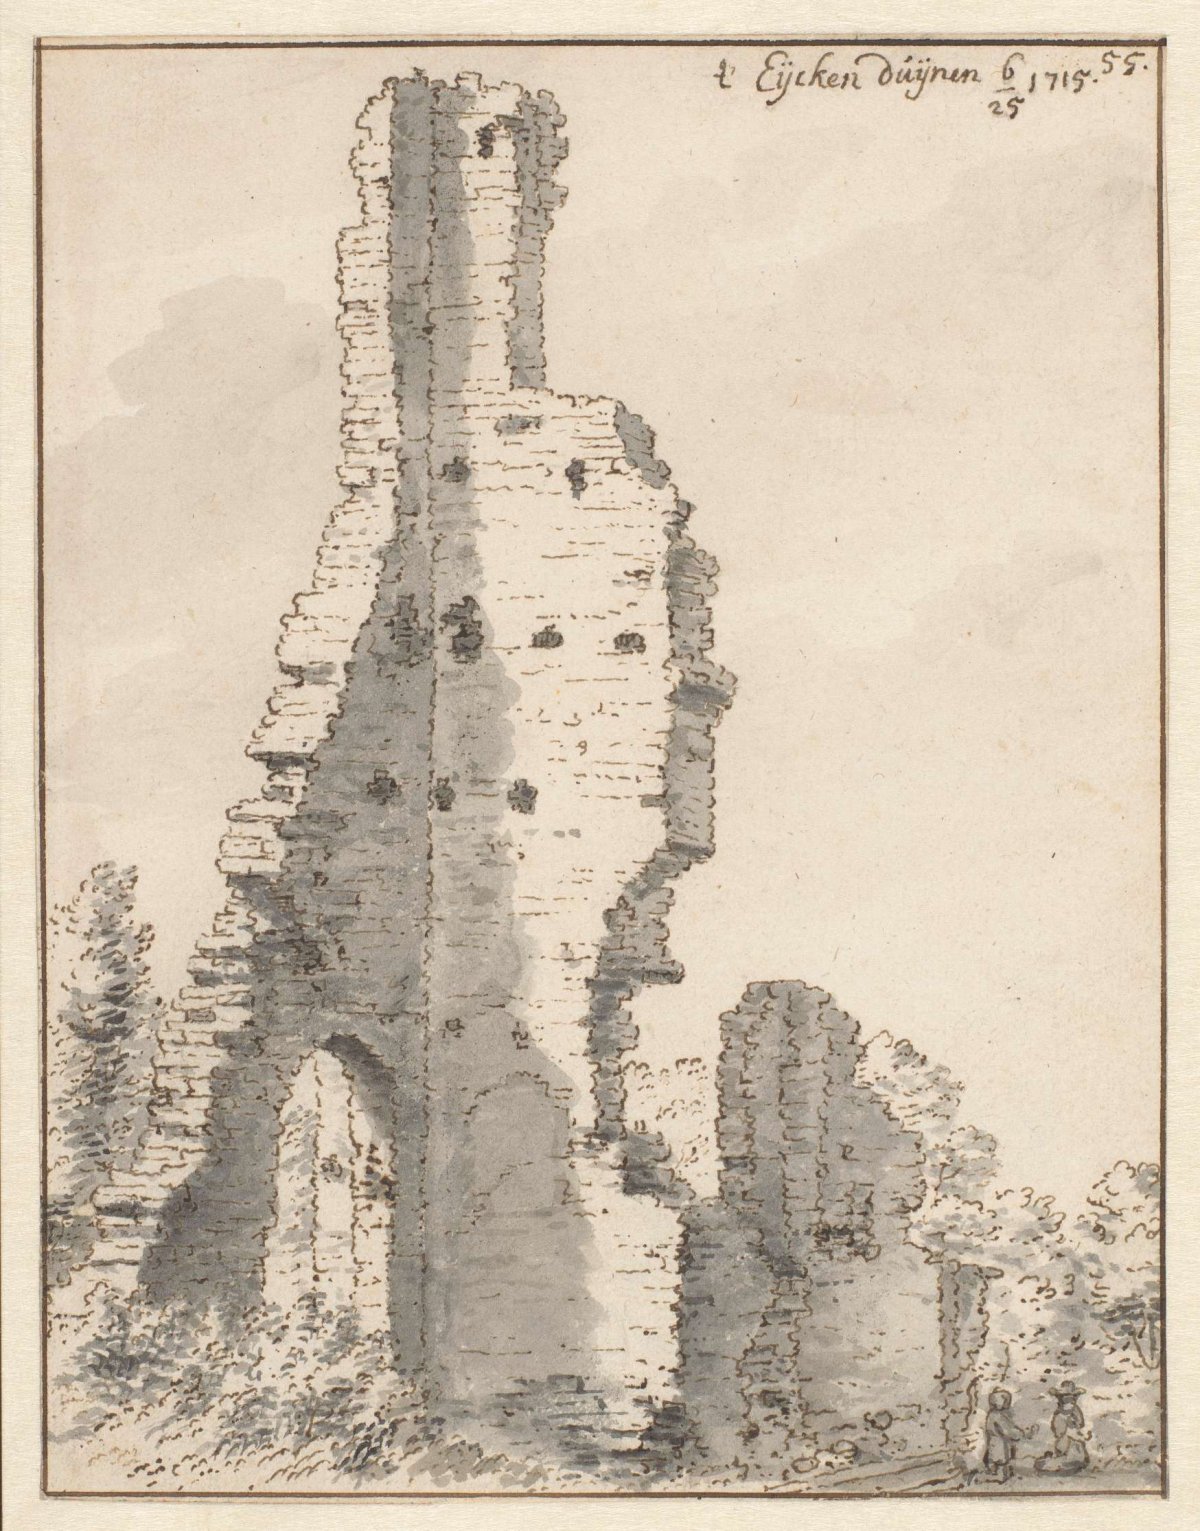 The Ruin of the Church of Eik en Duinen near The Hague, Valentijn Klotz, 1715